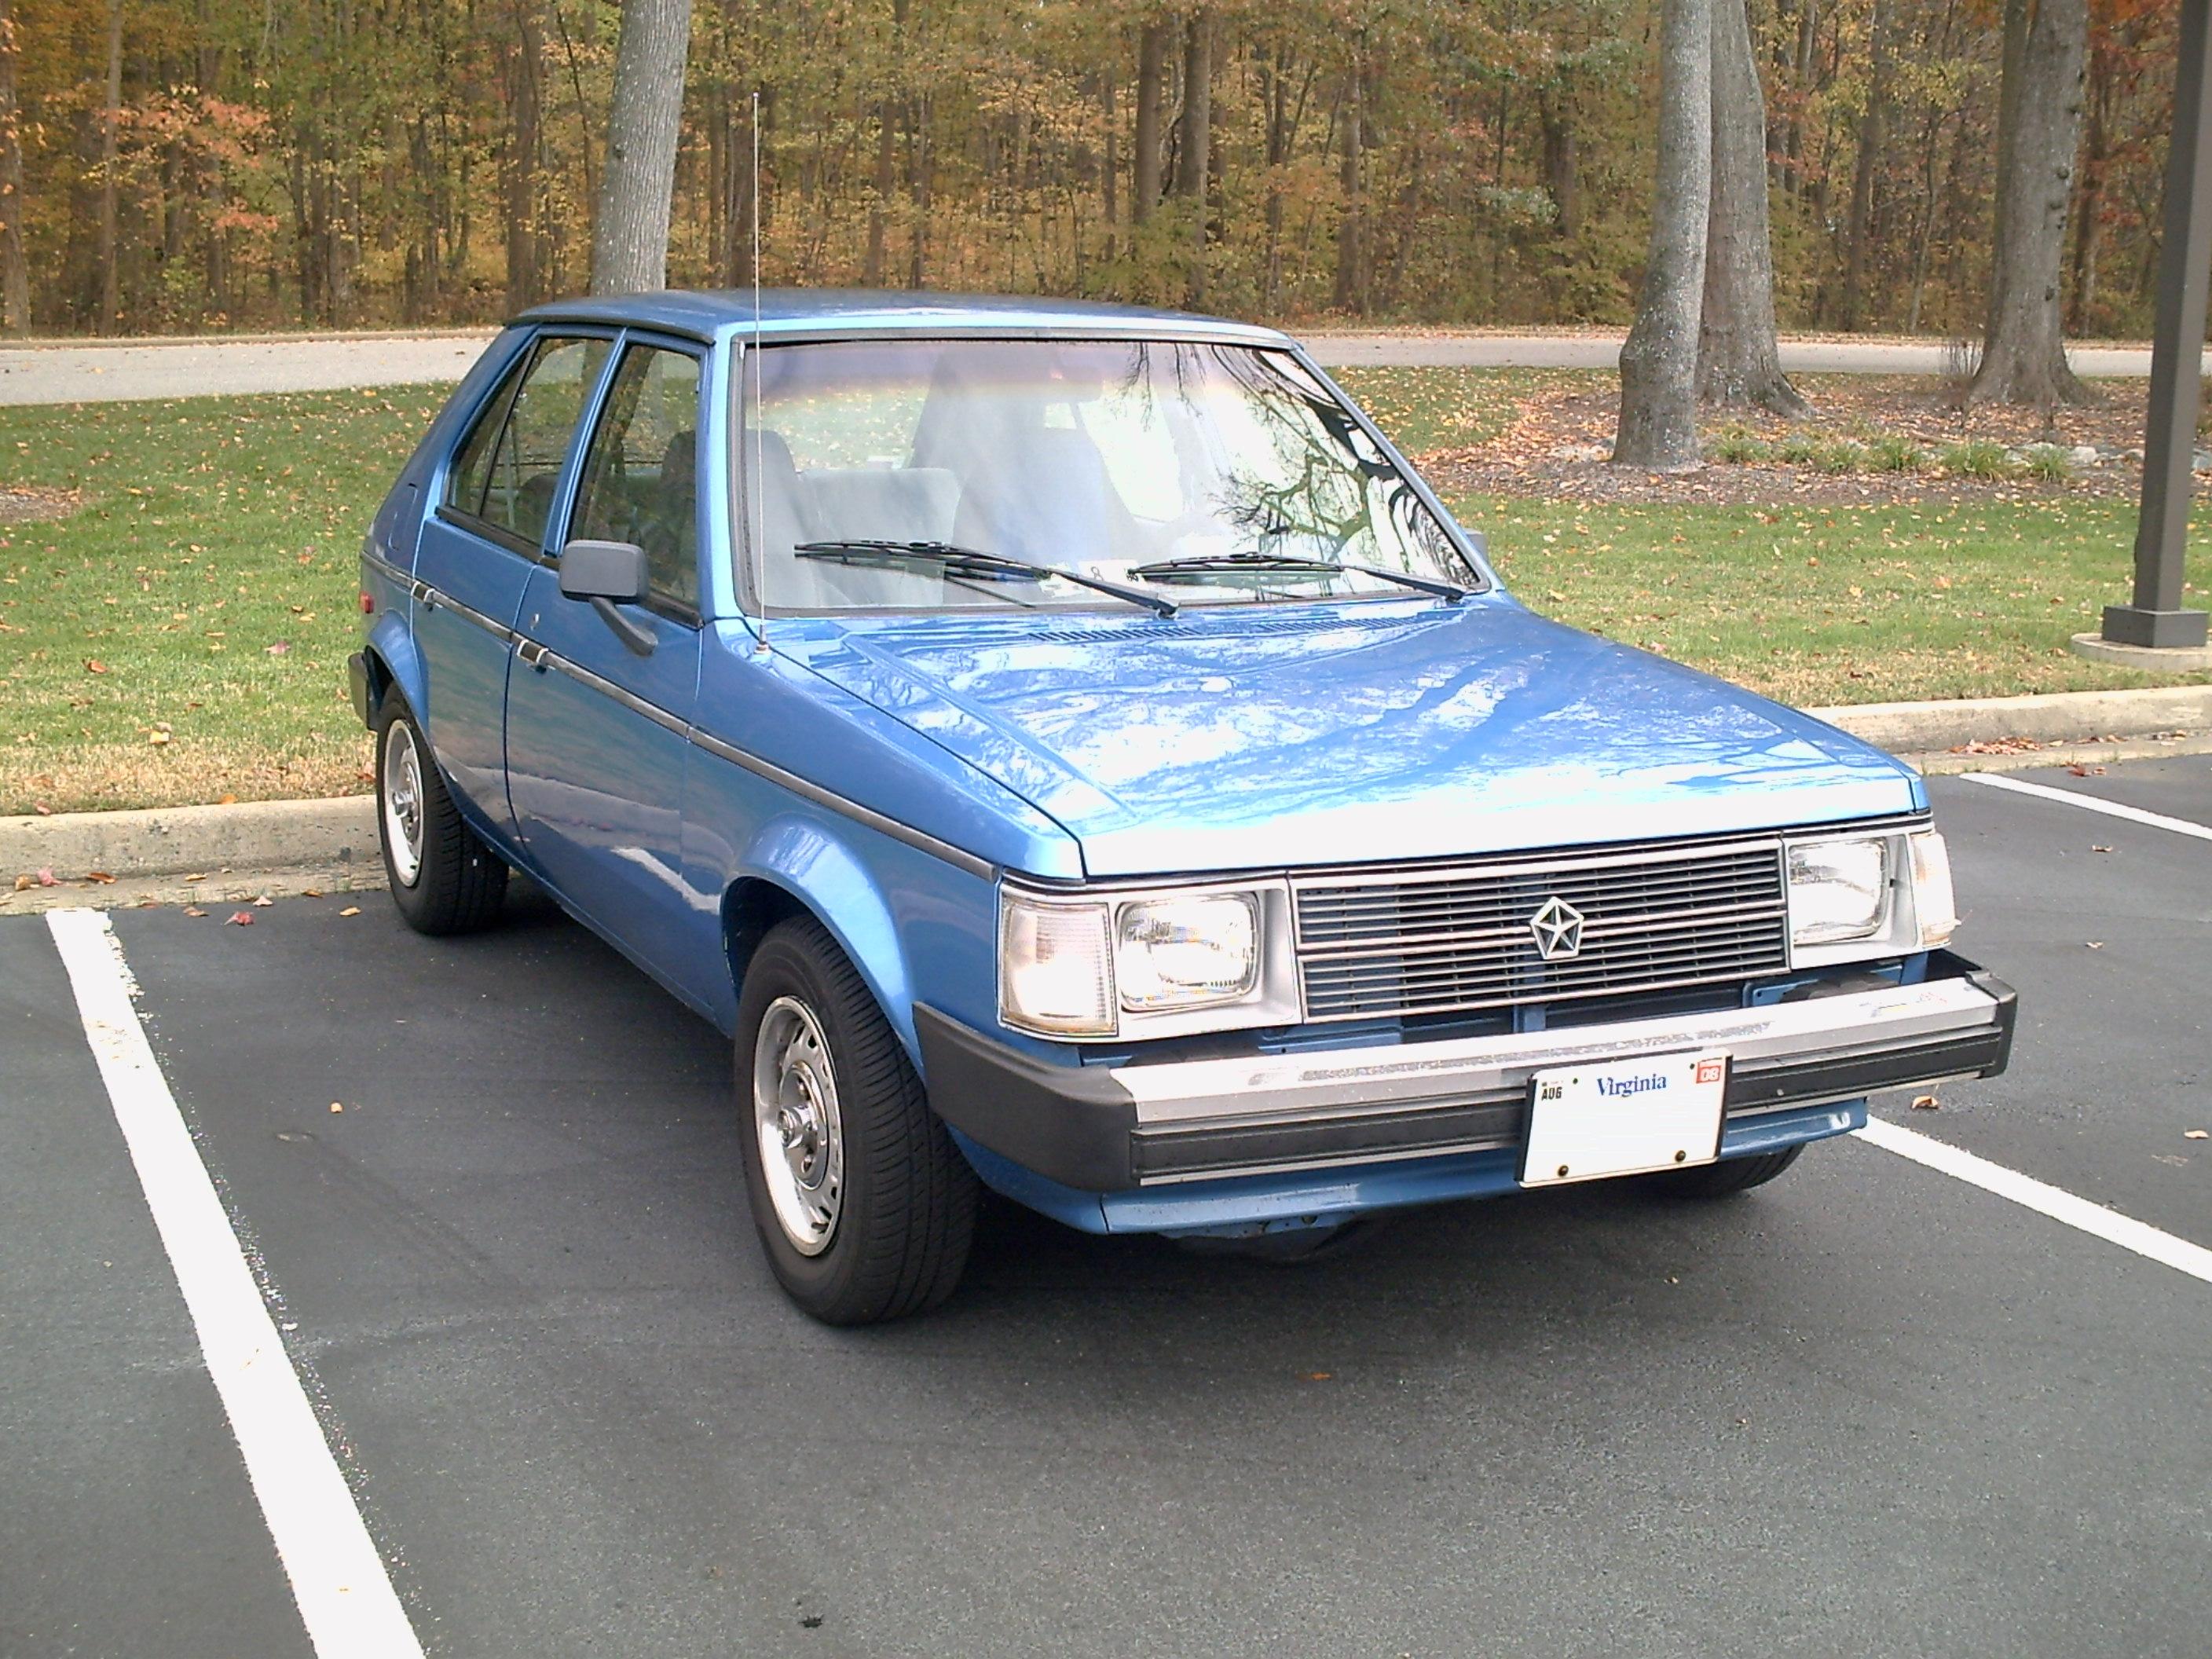 File:1990 Dodge Omni.JPG